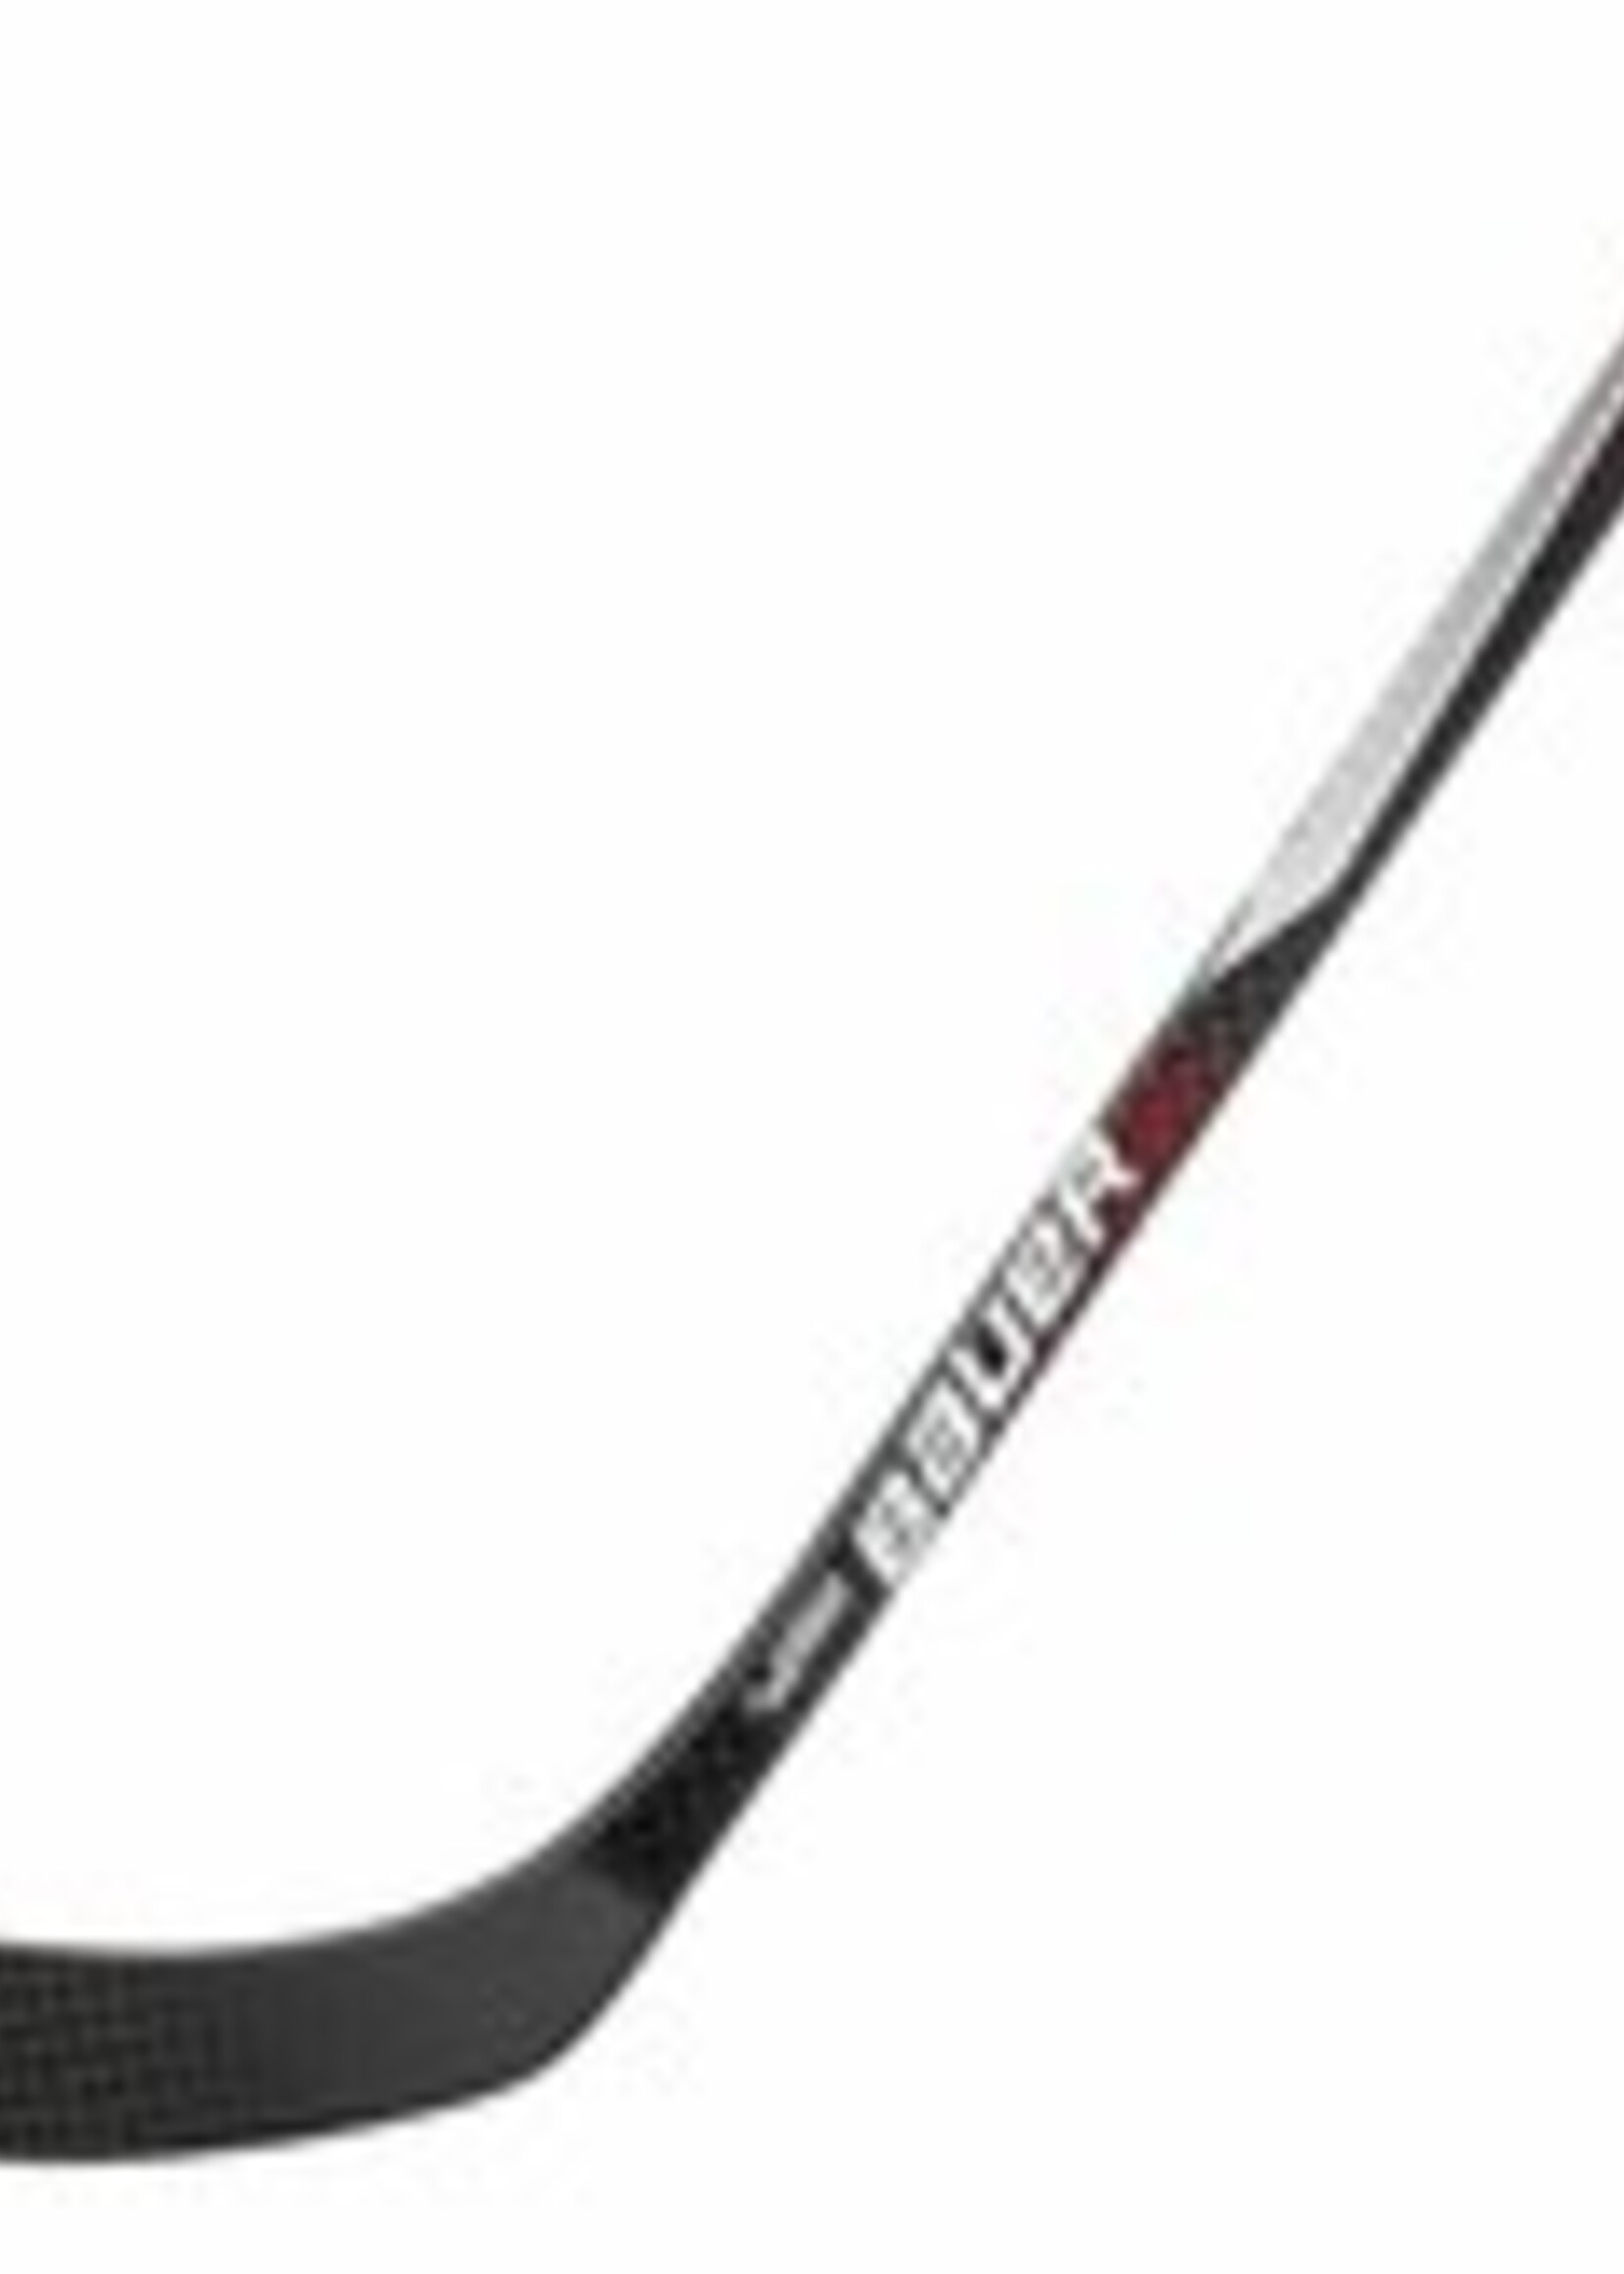 BAU Bauer Vapor X900 Griptac Senior Hockey Stick